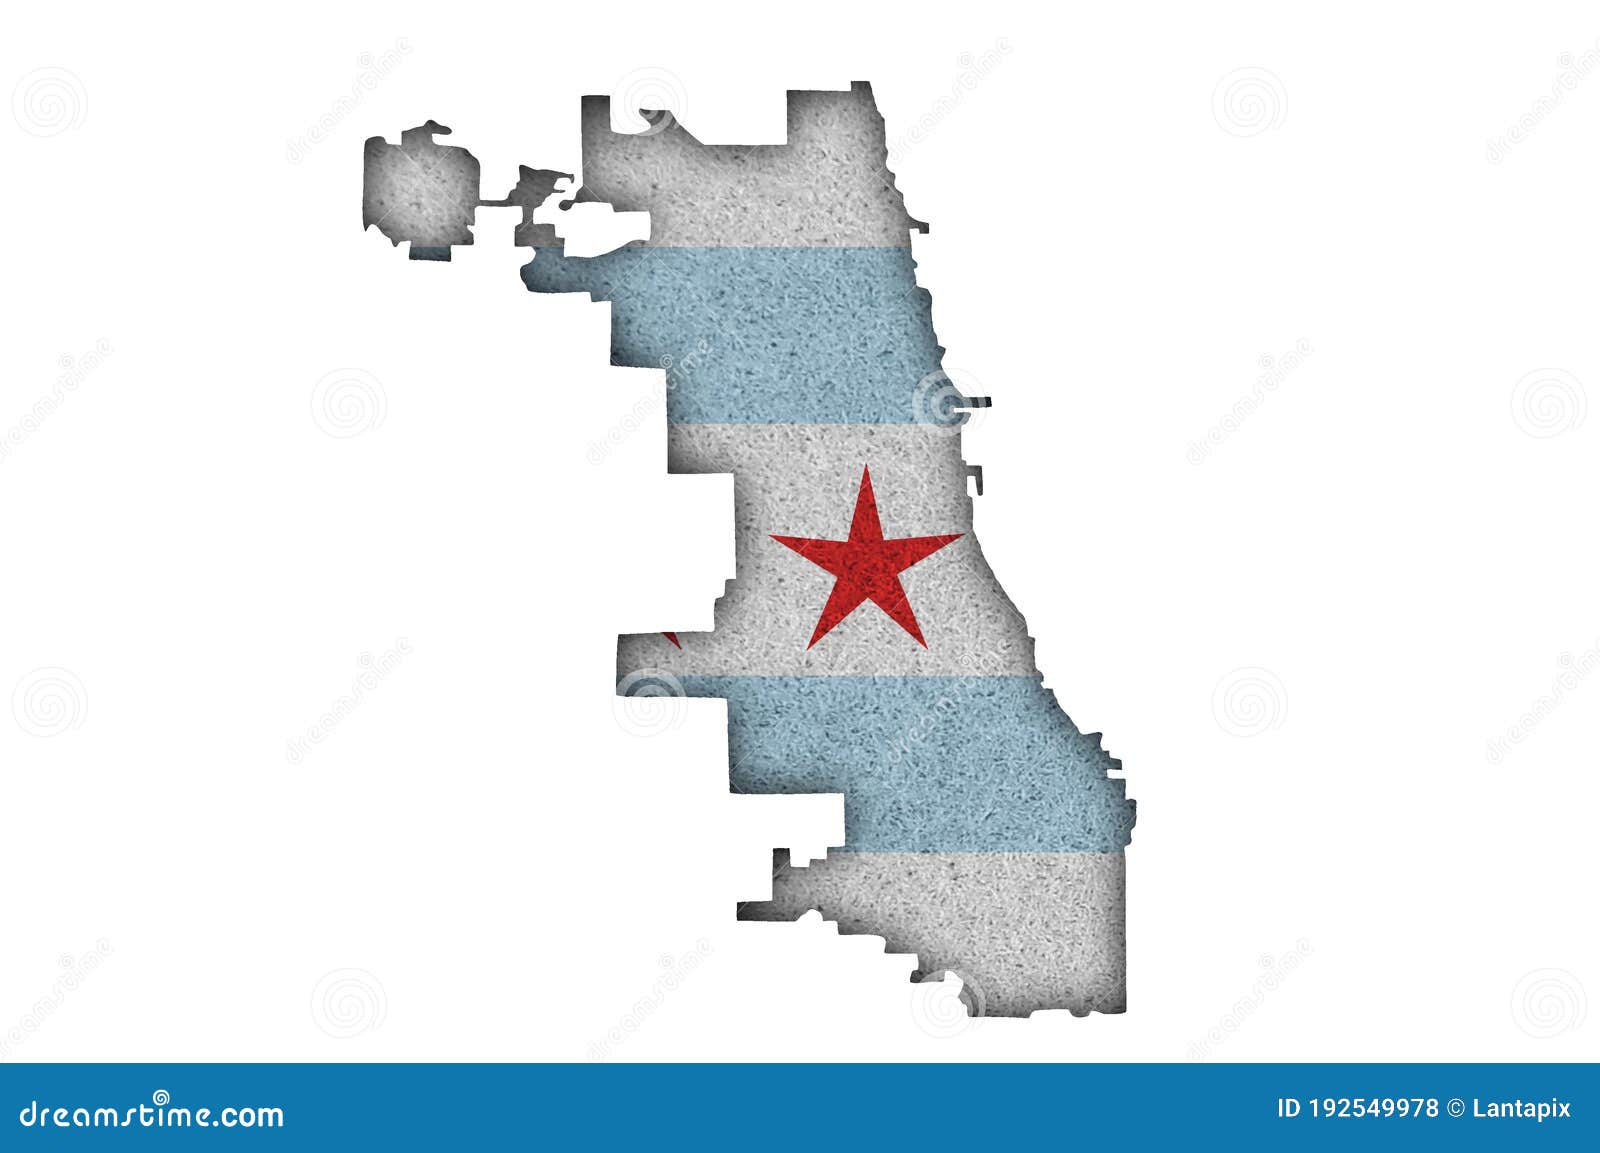 Chicago Flag Wallpaper - WallpaperSafari